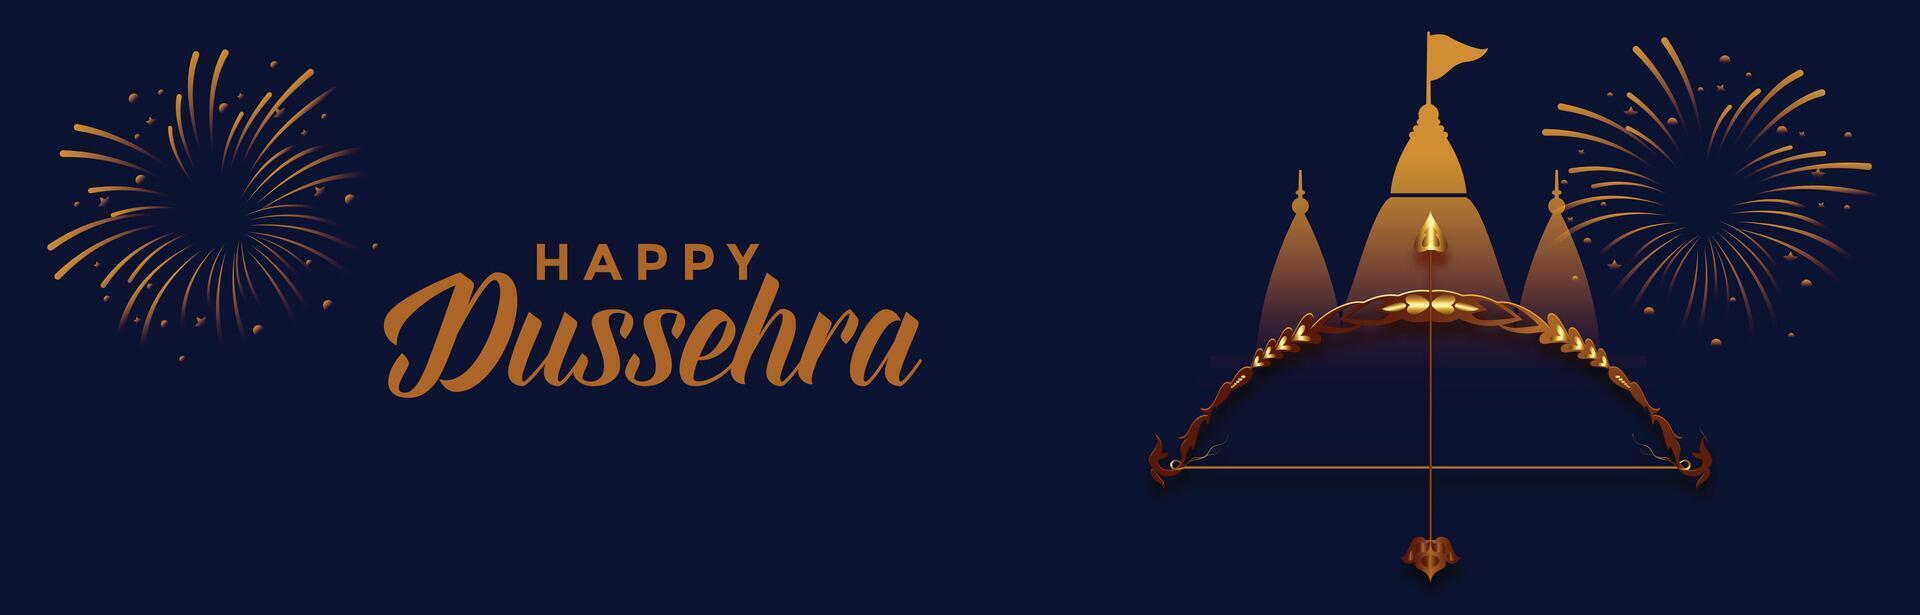 Indian happy dussehra celebration banner with dhanush baan vector